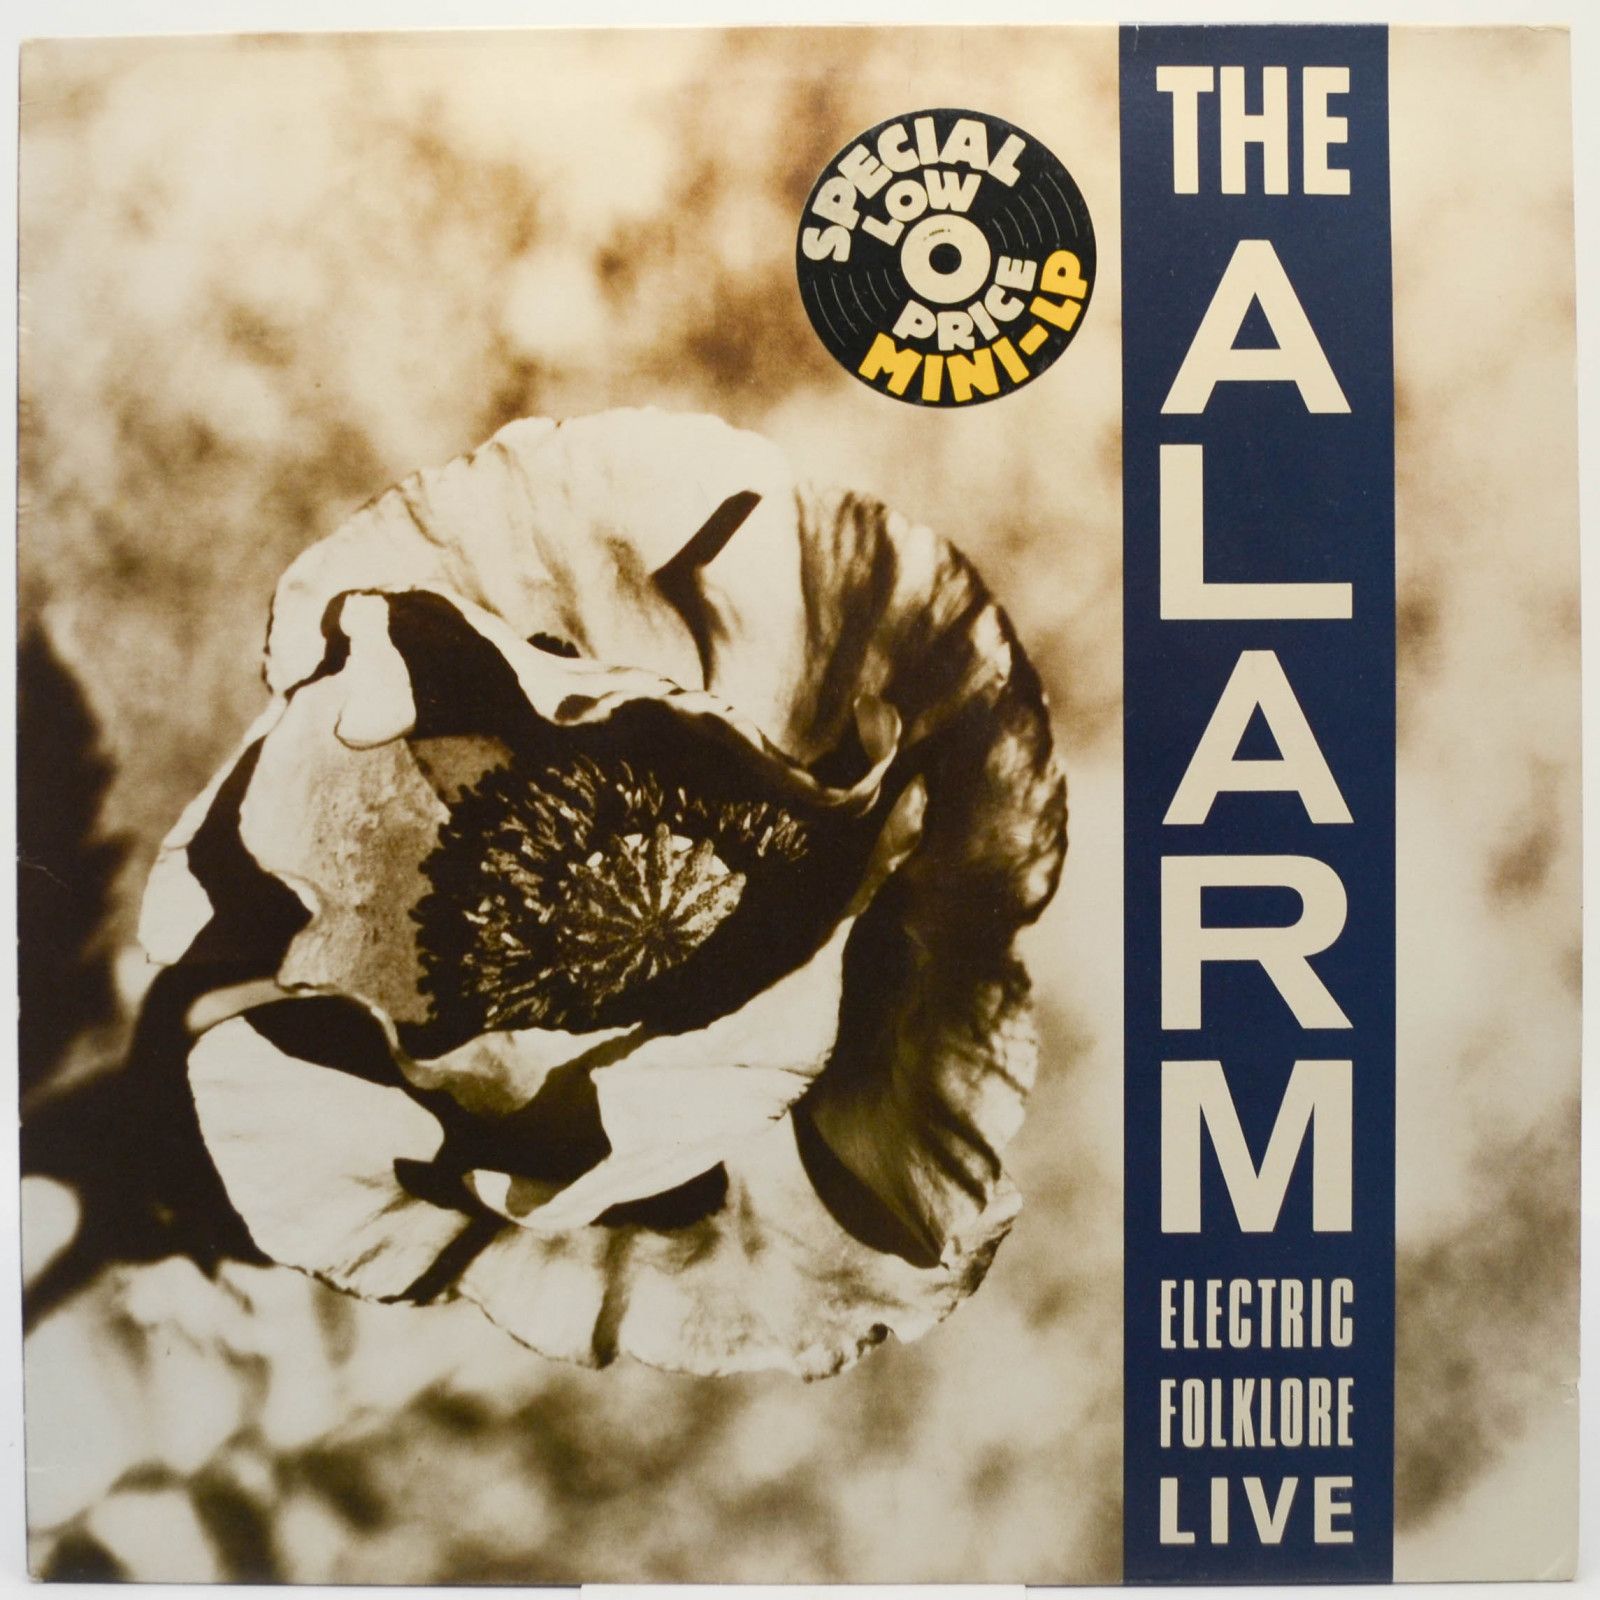 Alarm — Electric Folklore Live, 1988